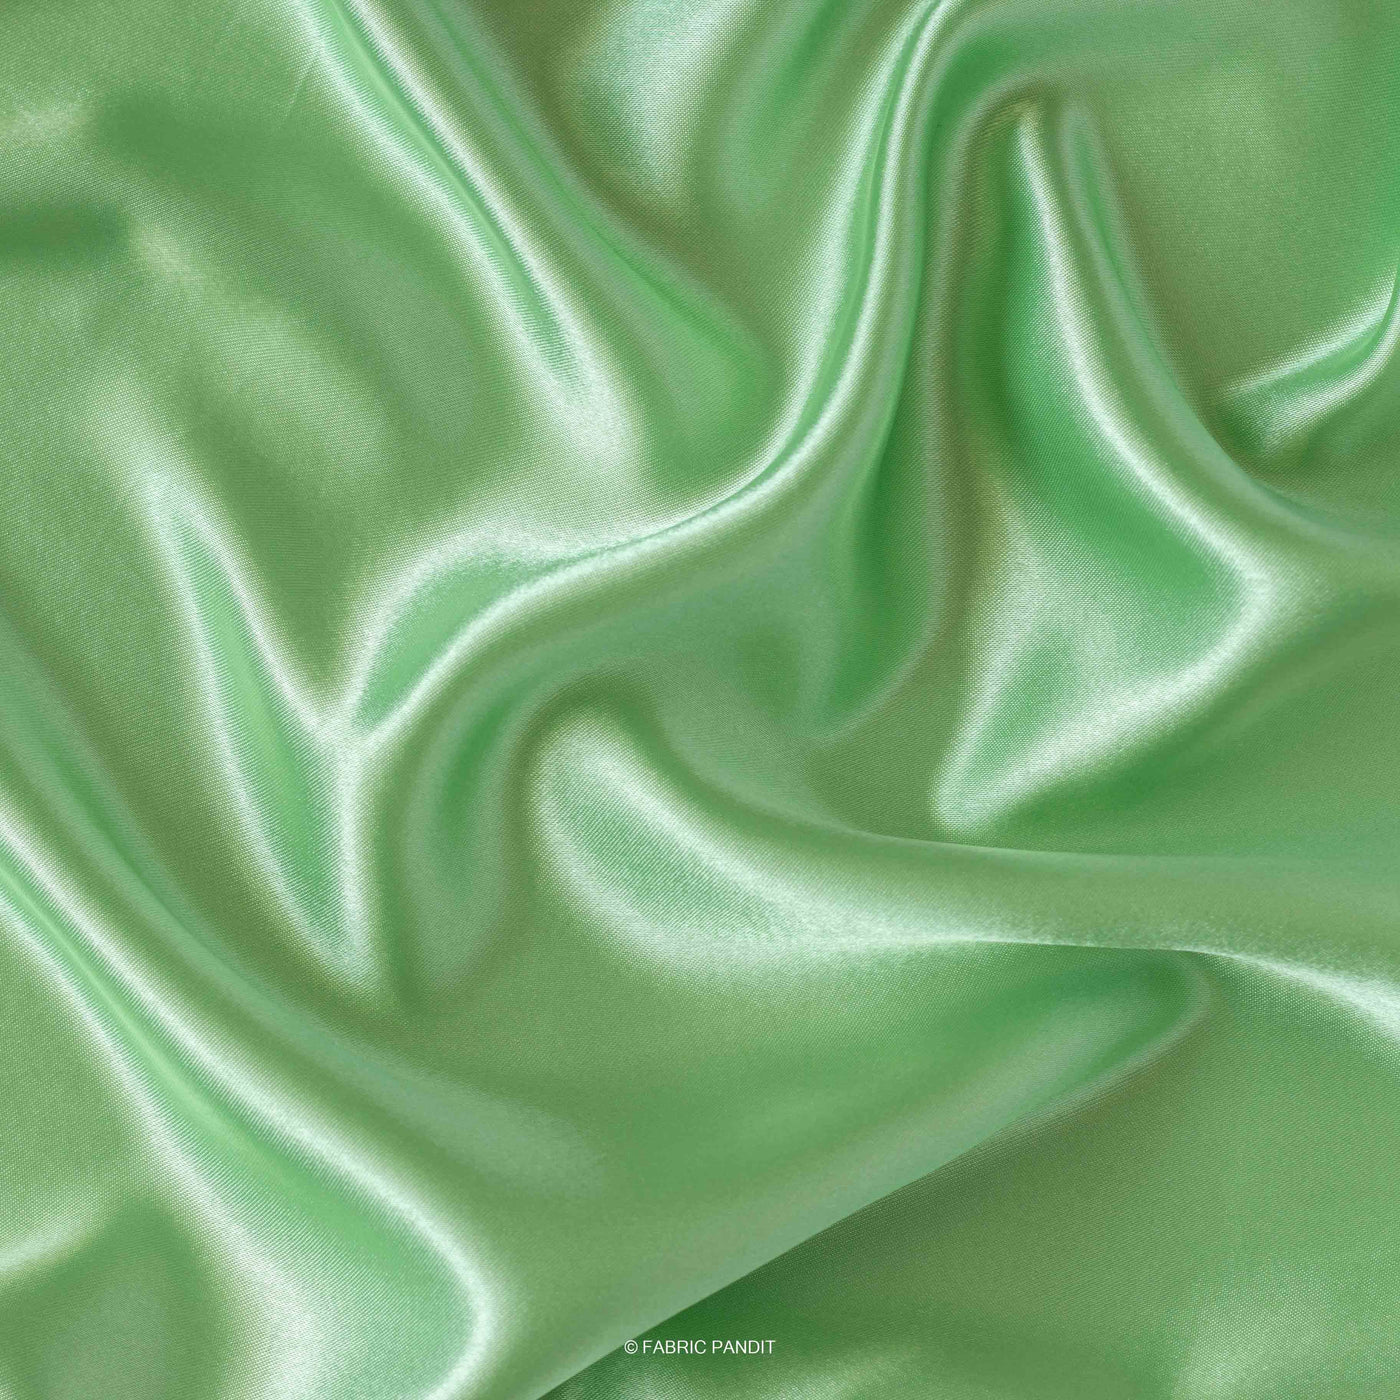 Fabric Pandit Fabric Light Fern Green Plain Premium Ultra Satin Fabric (Width 44 Inches)